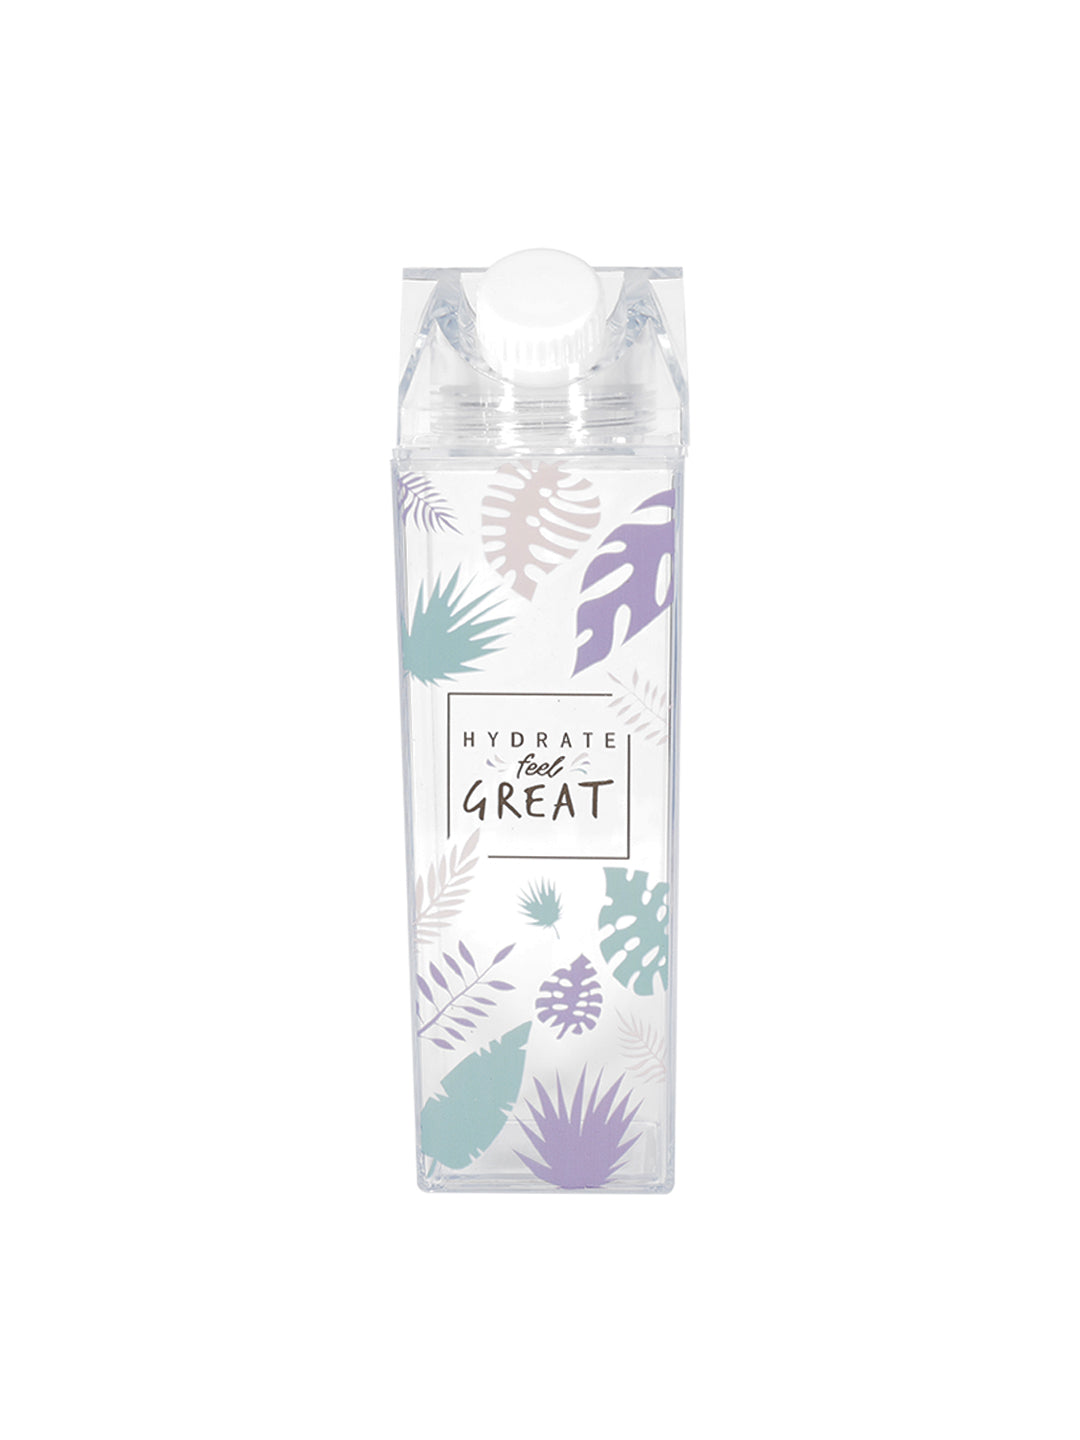 VON CASA "HYDRATE feel GREAT" Plastic Juice Bottles - 500Ml, Transparent